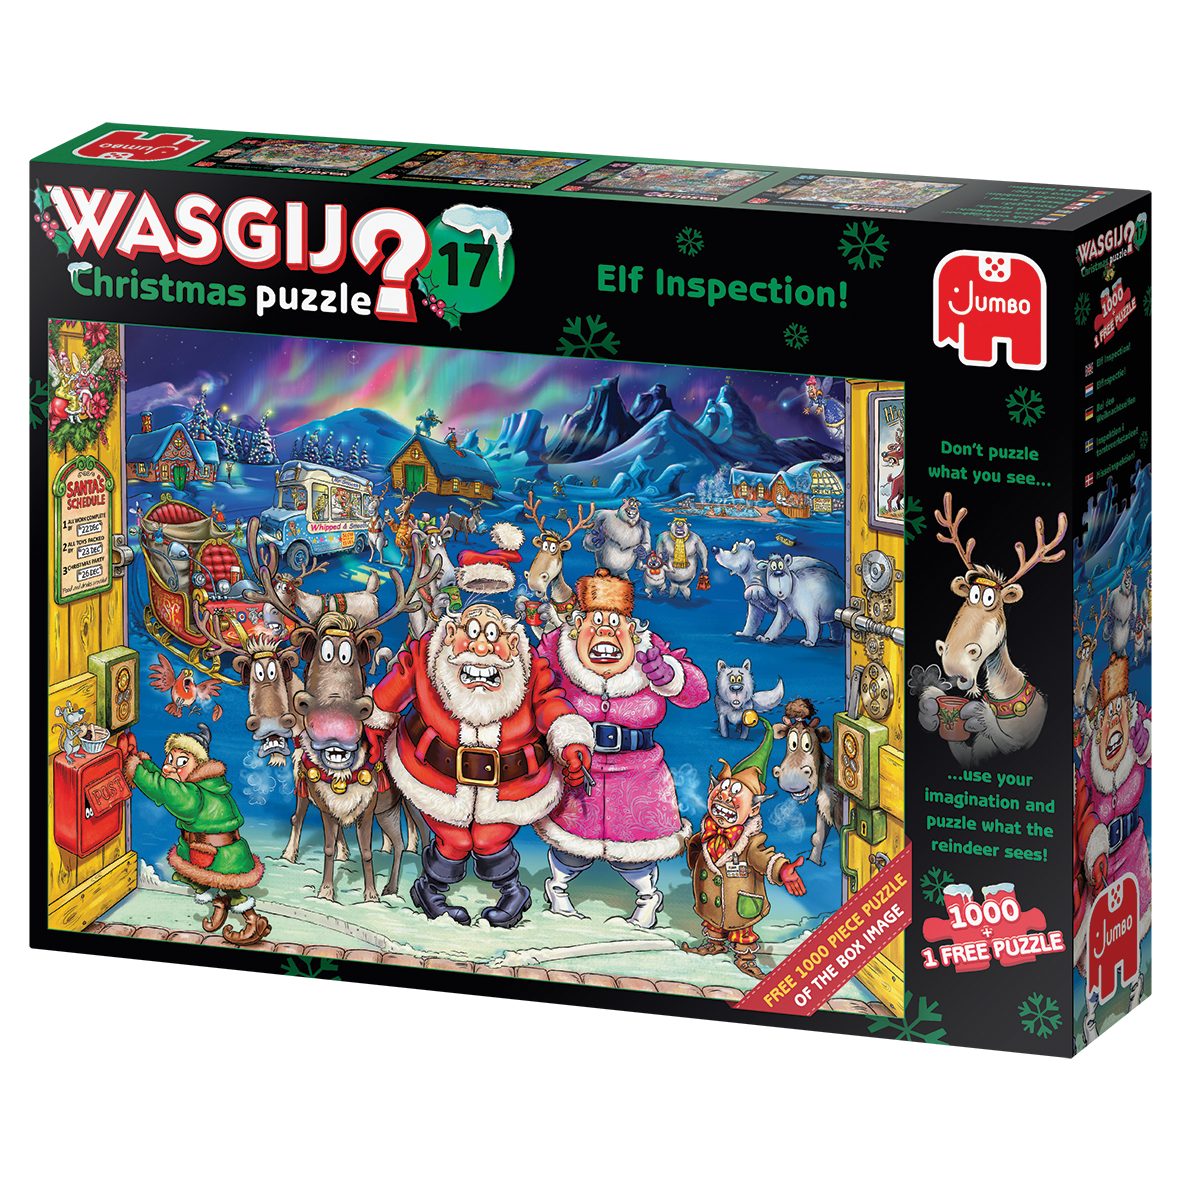 Wasgij - Puzzle Inspection!, Puzzleteile Christmas Spiele Jumbo 17 Elf 25003 1000